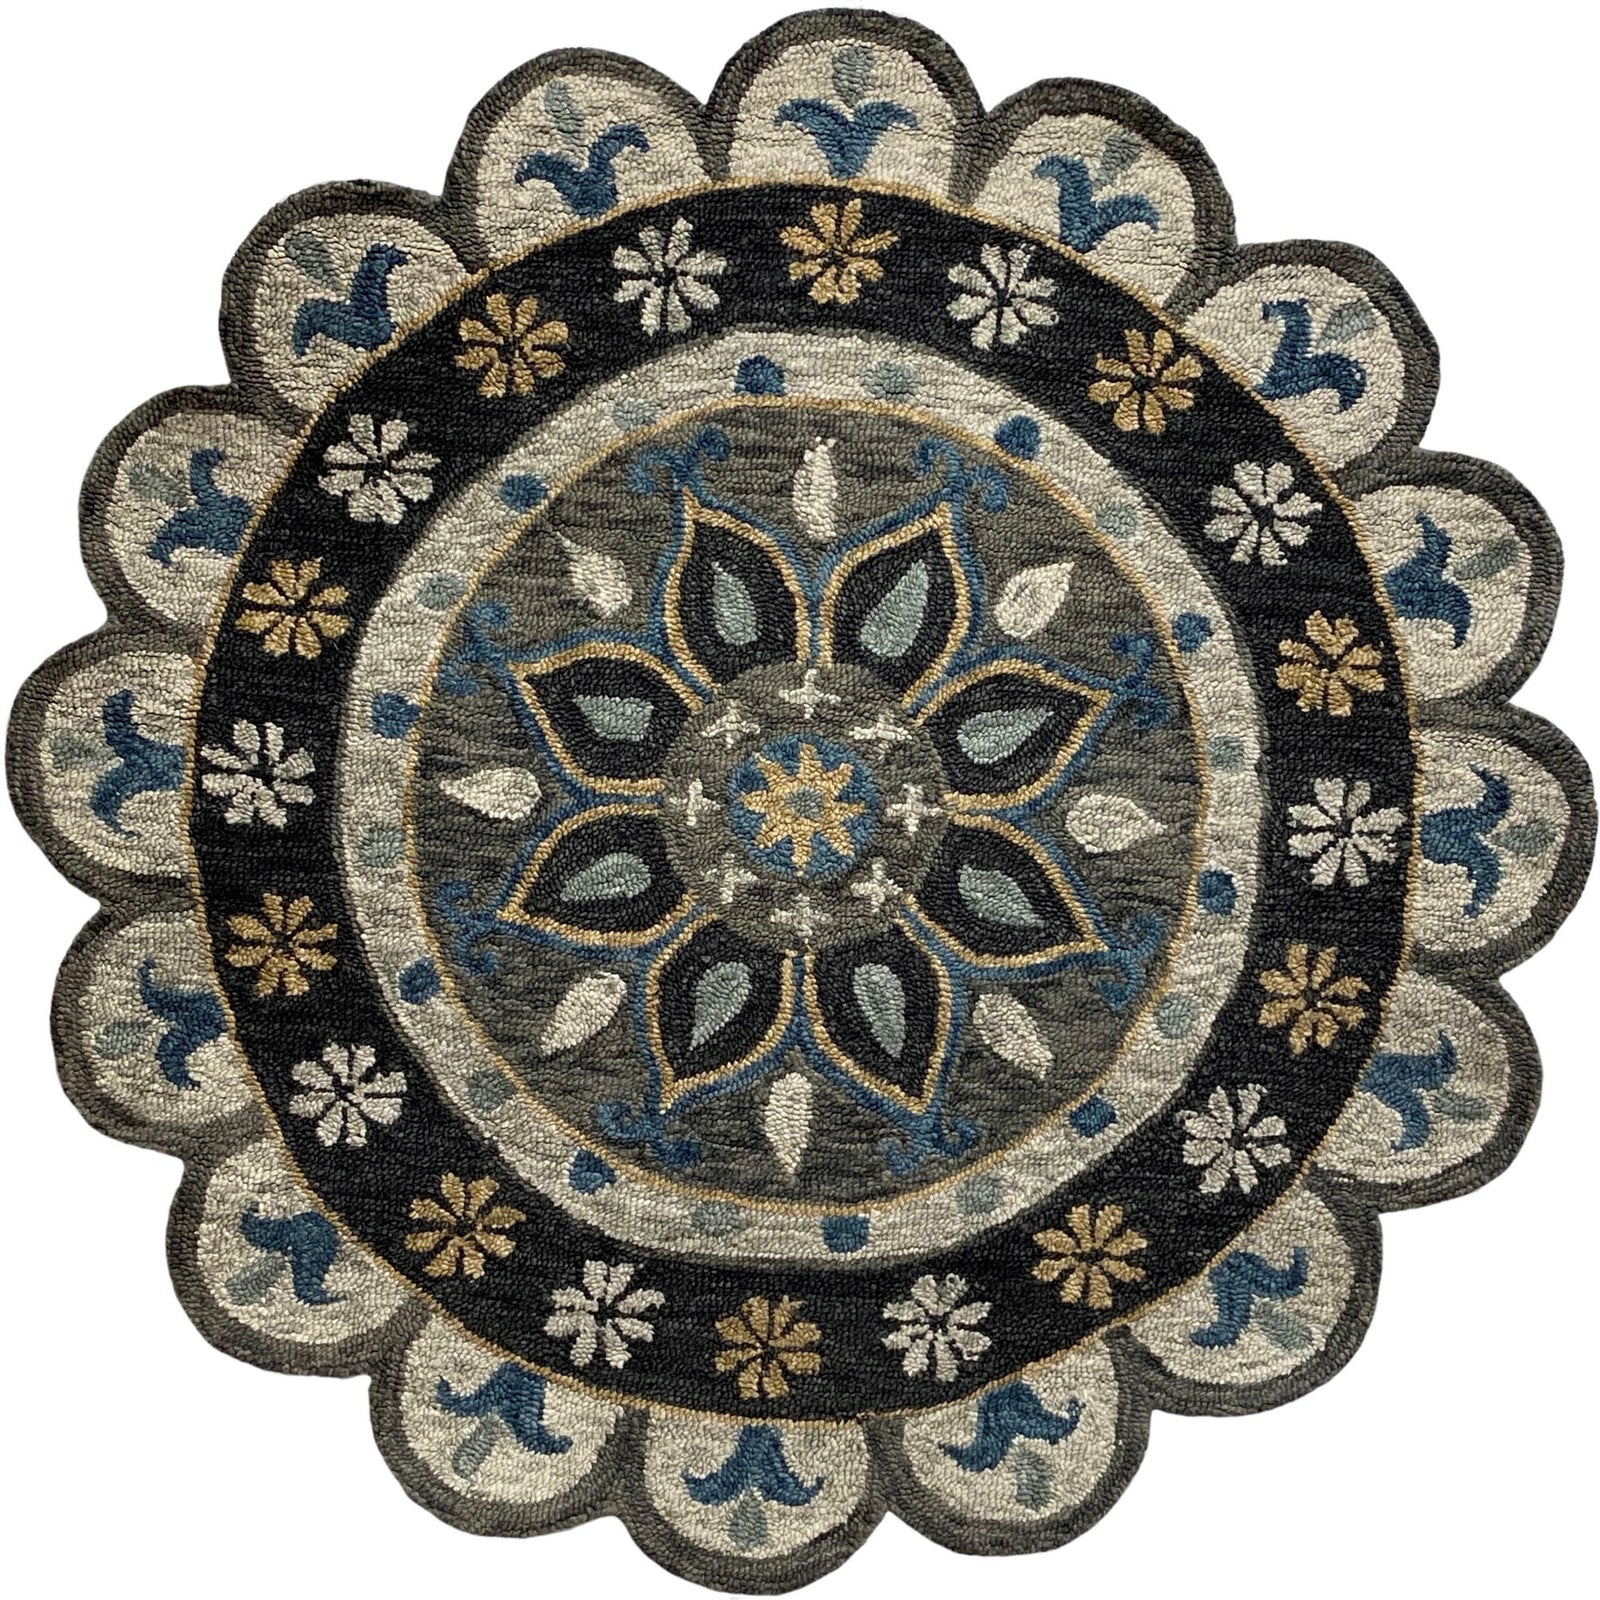 3’ Round Gray Border Floral Medallion Area Rug